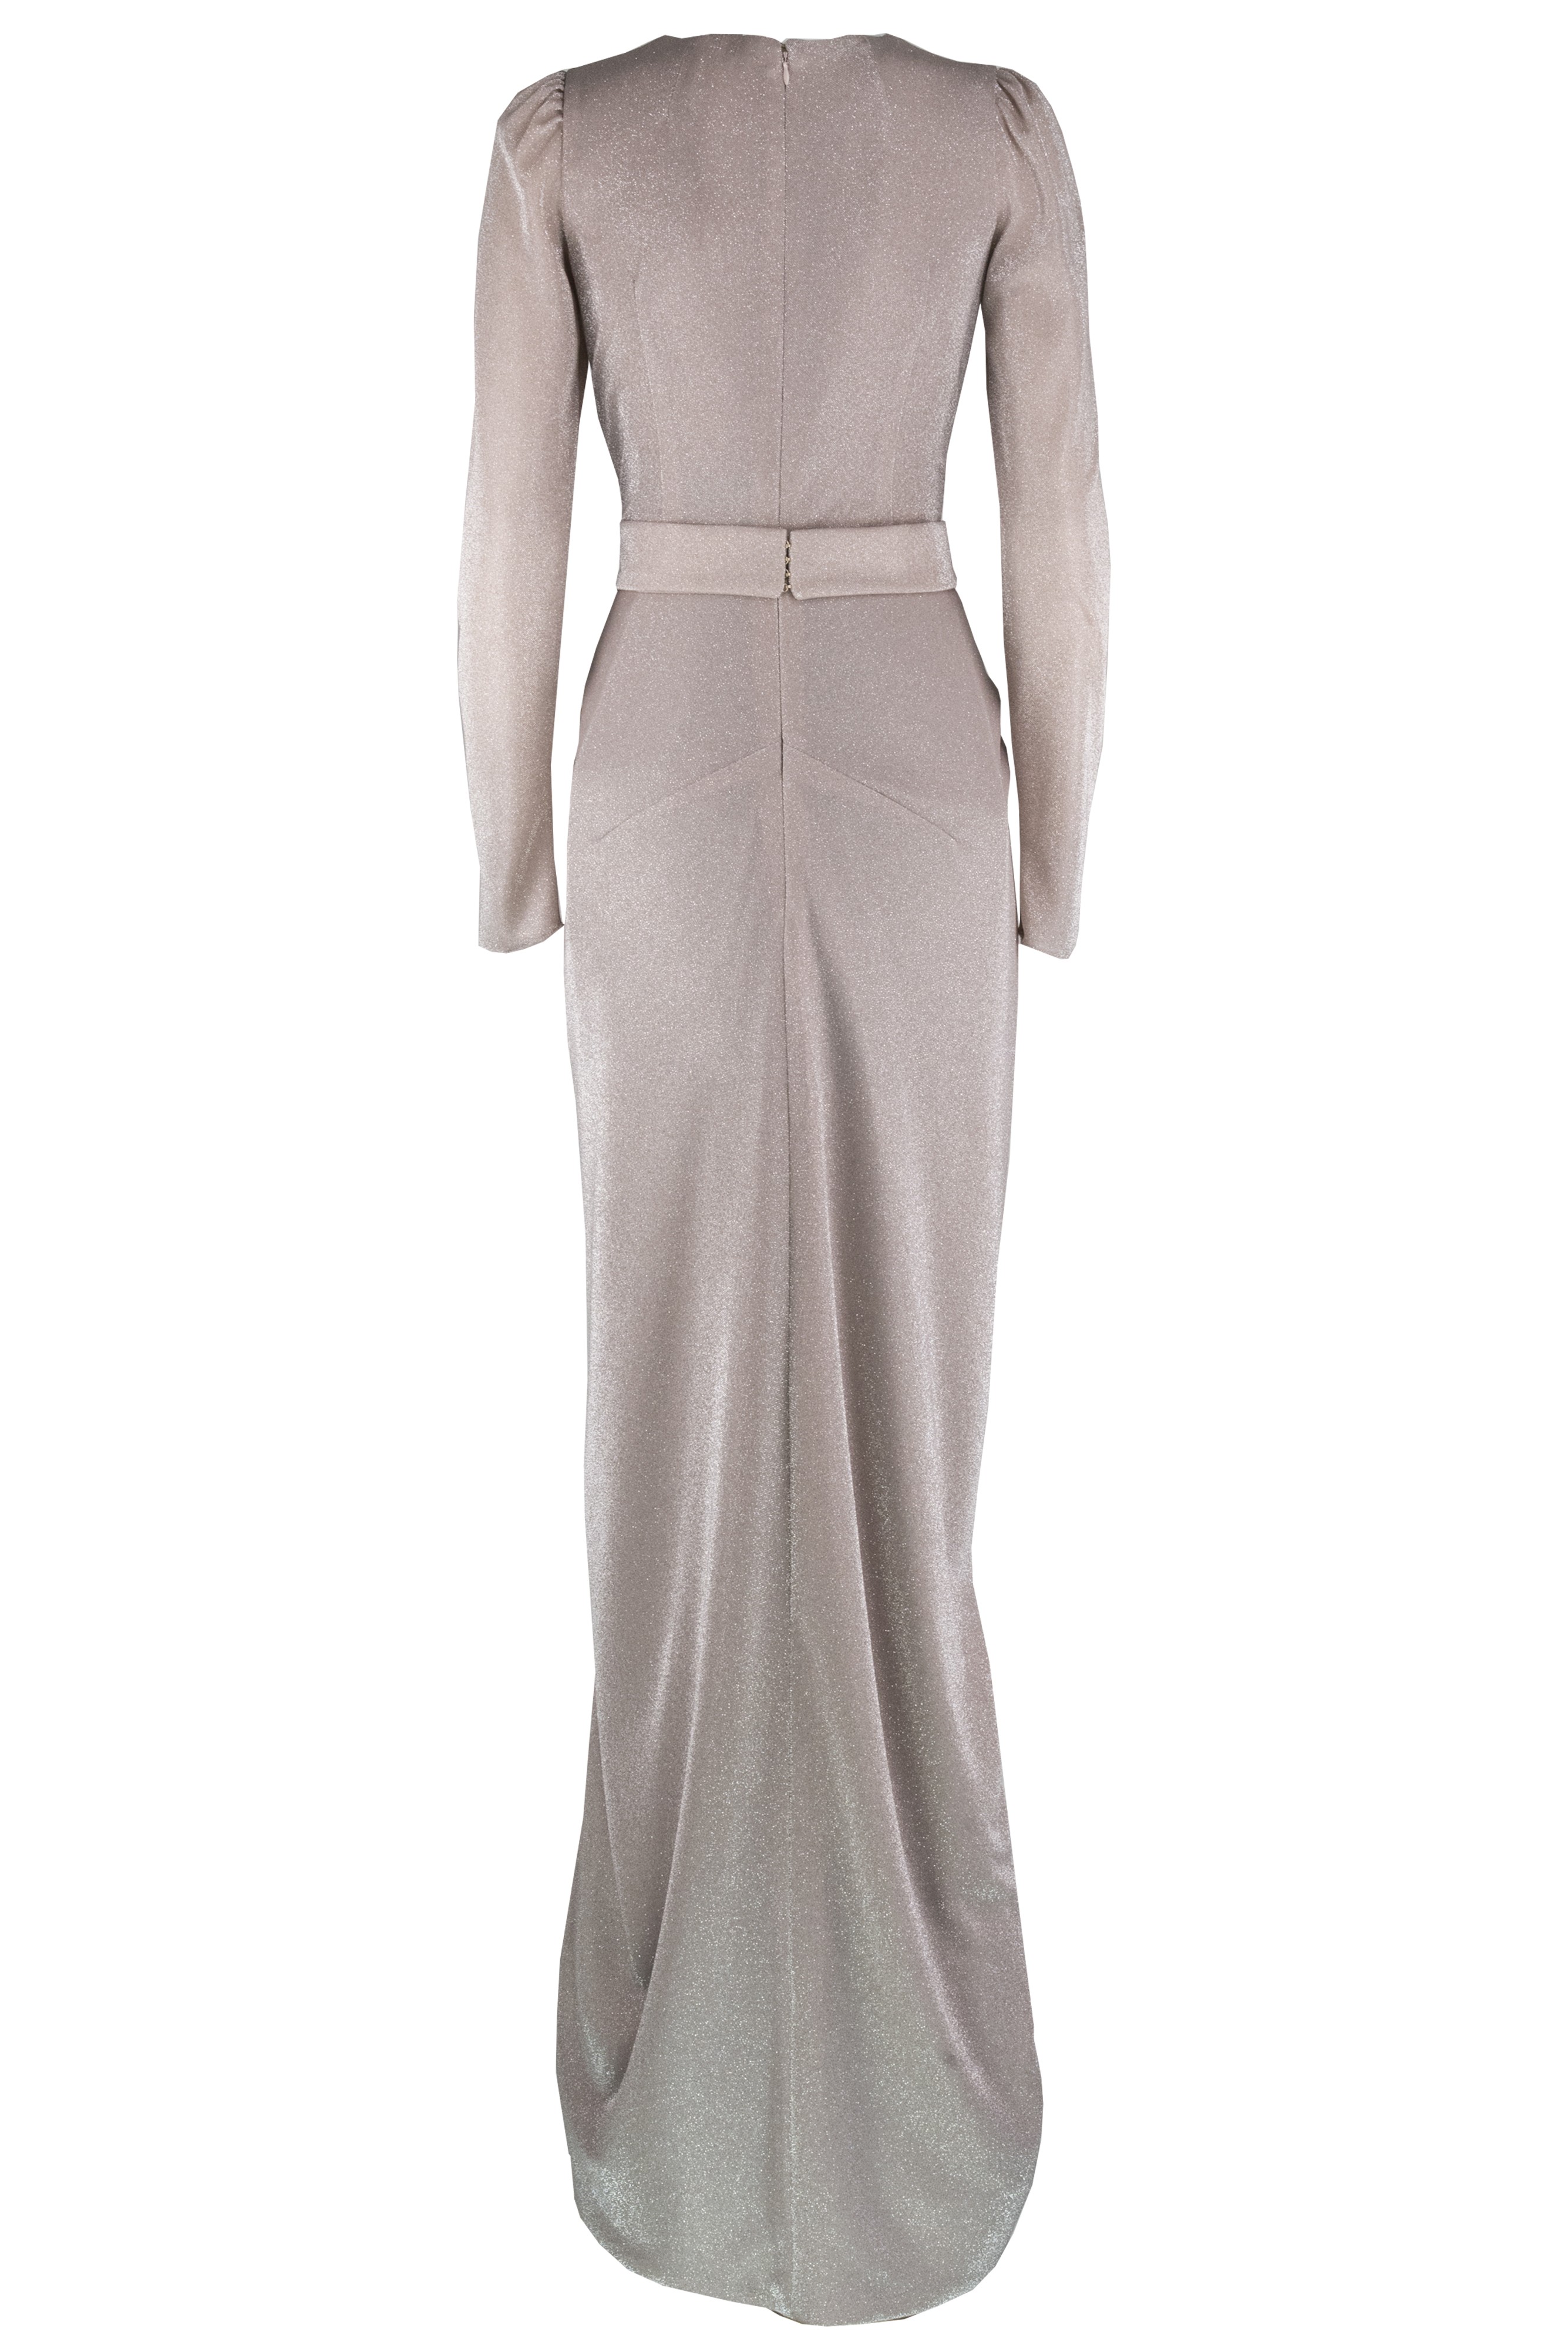 Rhea Costa Dress 20109D LG - New Season Spring Summer 2020